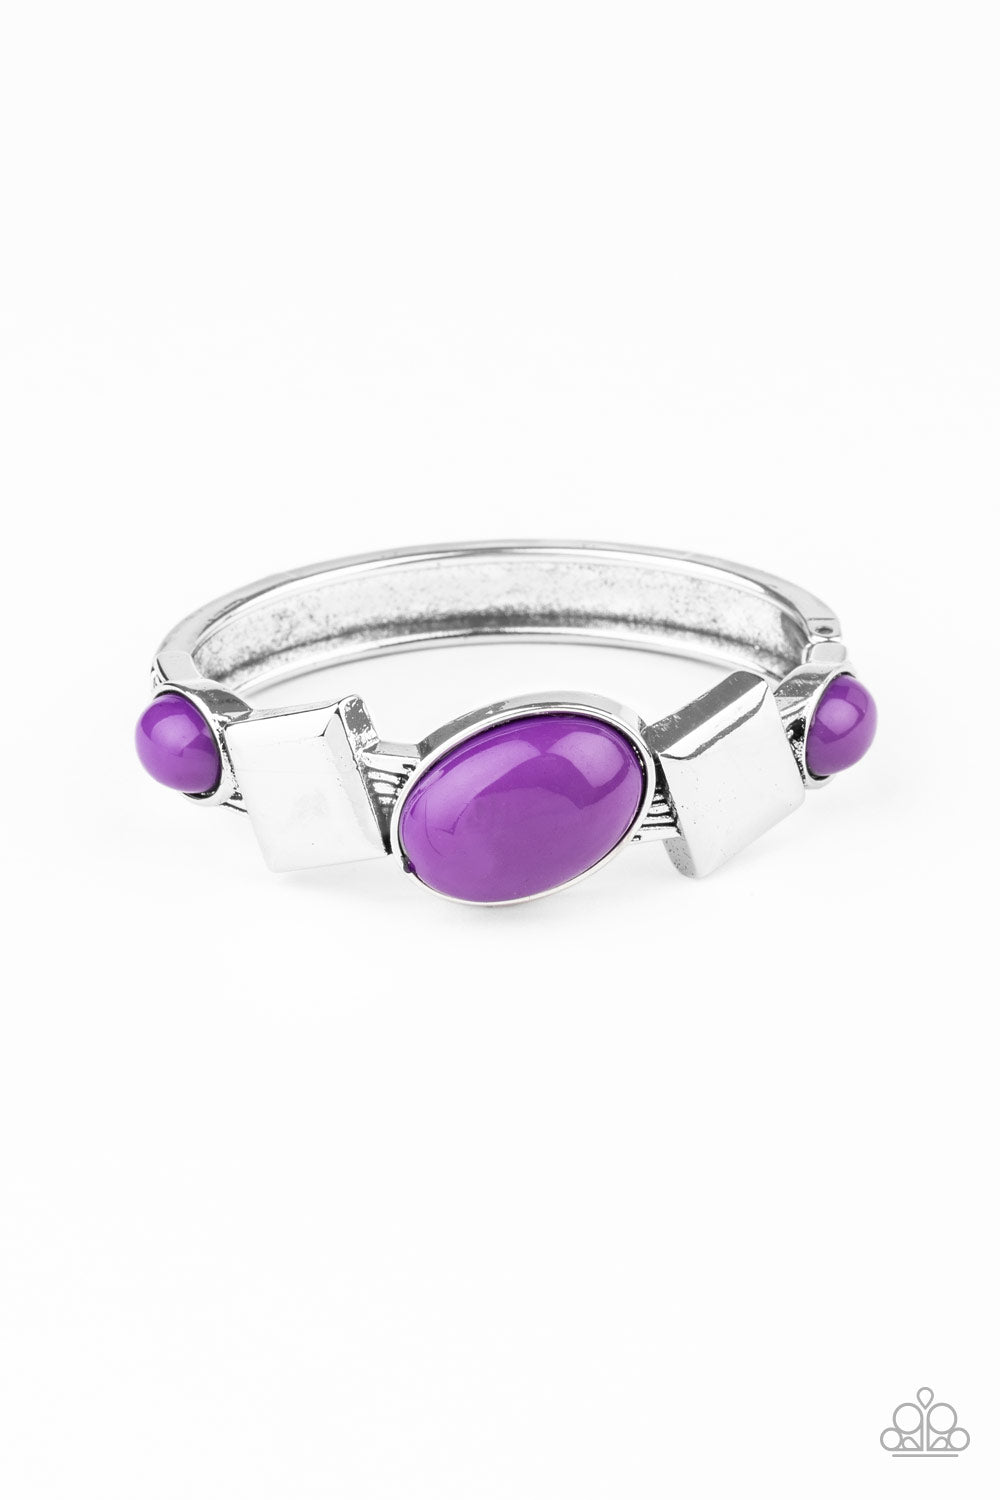 Abstract Appeal - Purple Bracelet - Princess Glam Shop